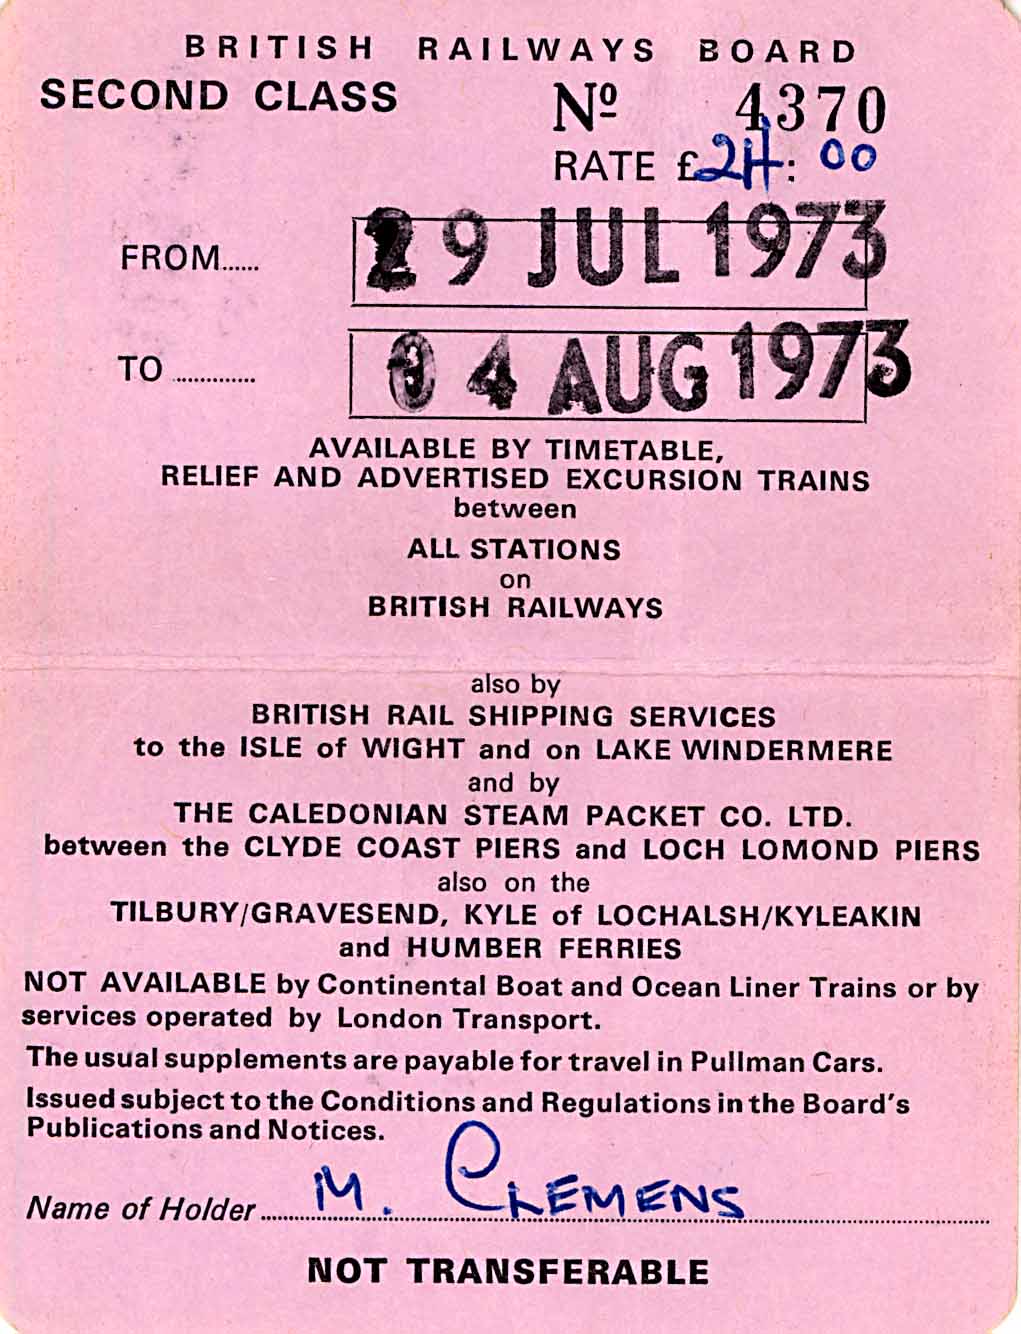 29th July 1973